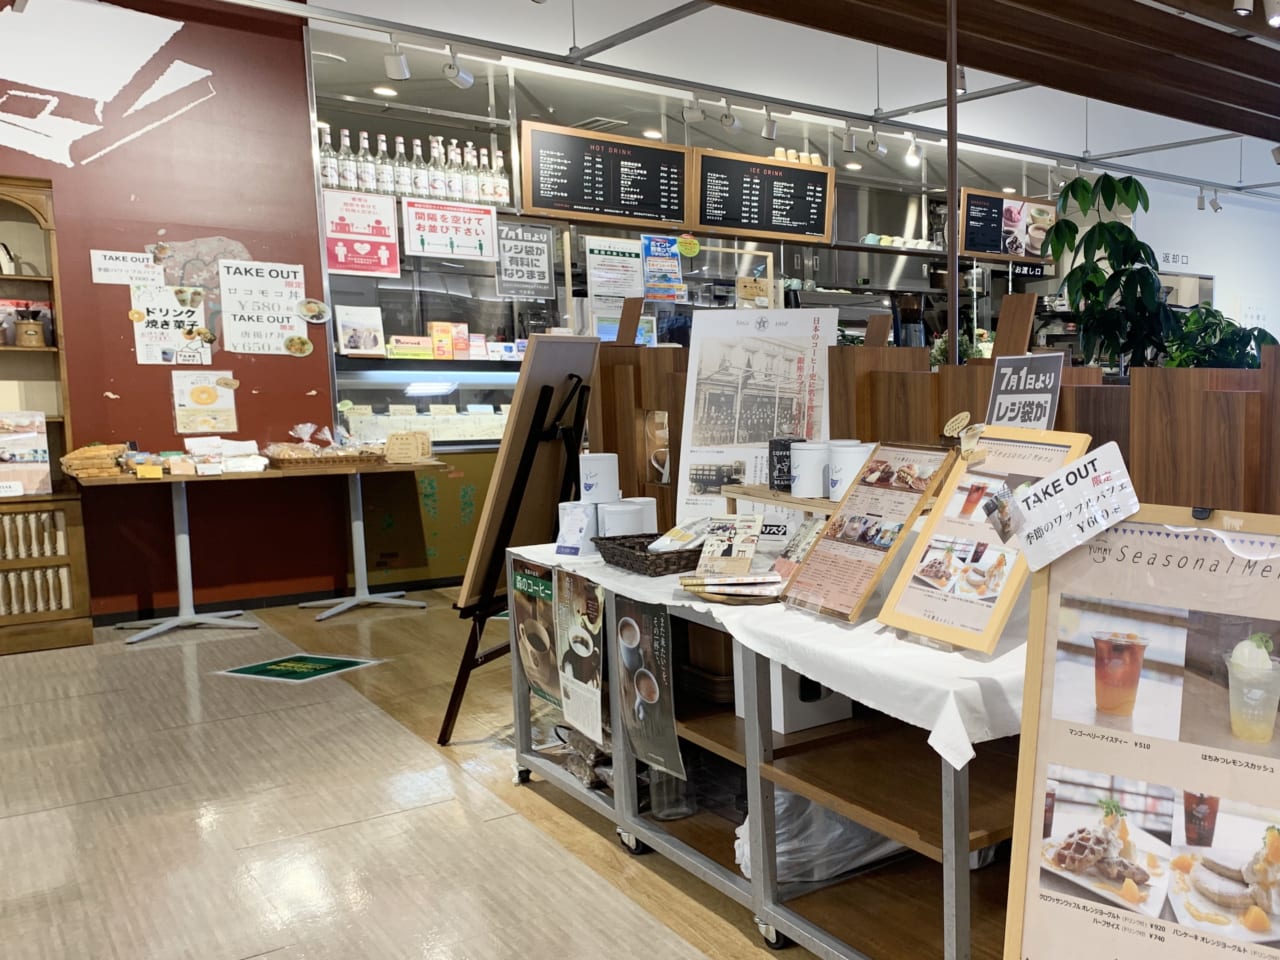 今井書店AREA